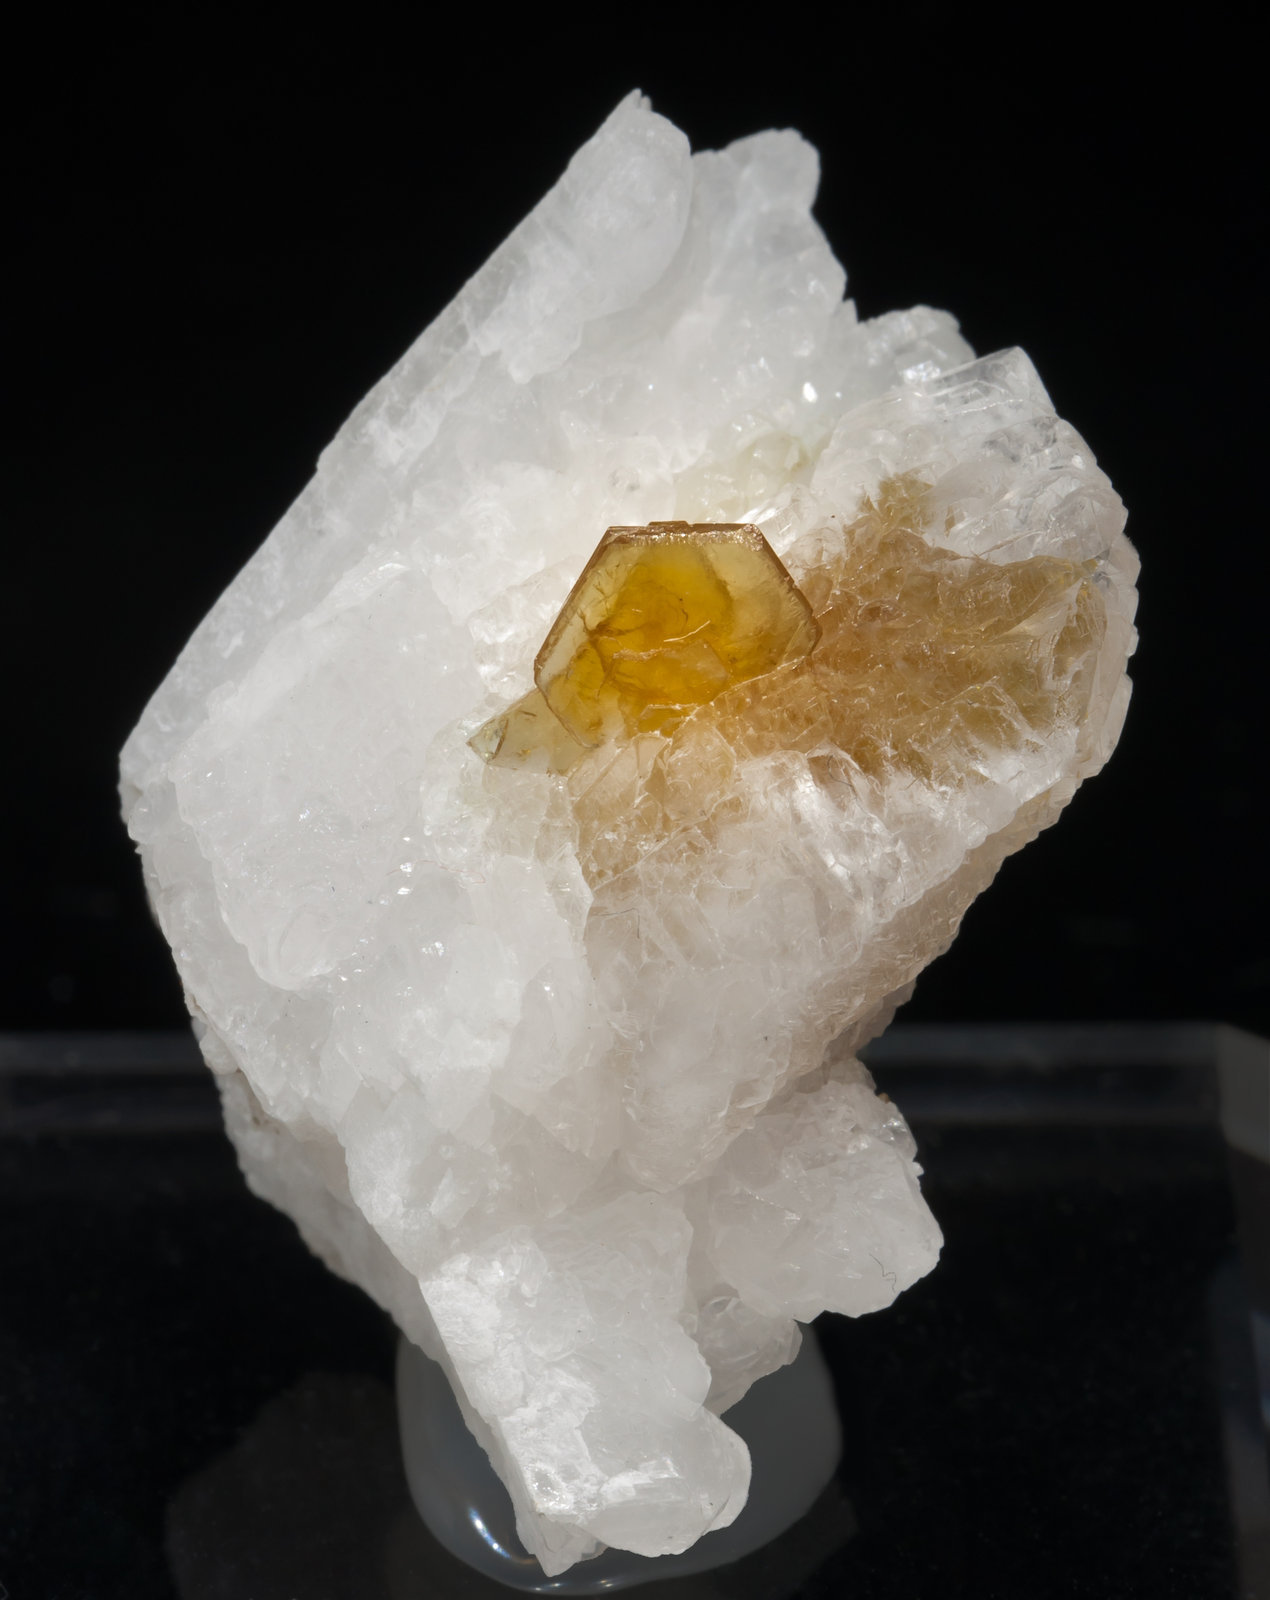 specimens/s_imagesAF1/Hydroxylbastnasite-MX67AF1f.jpg